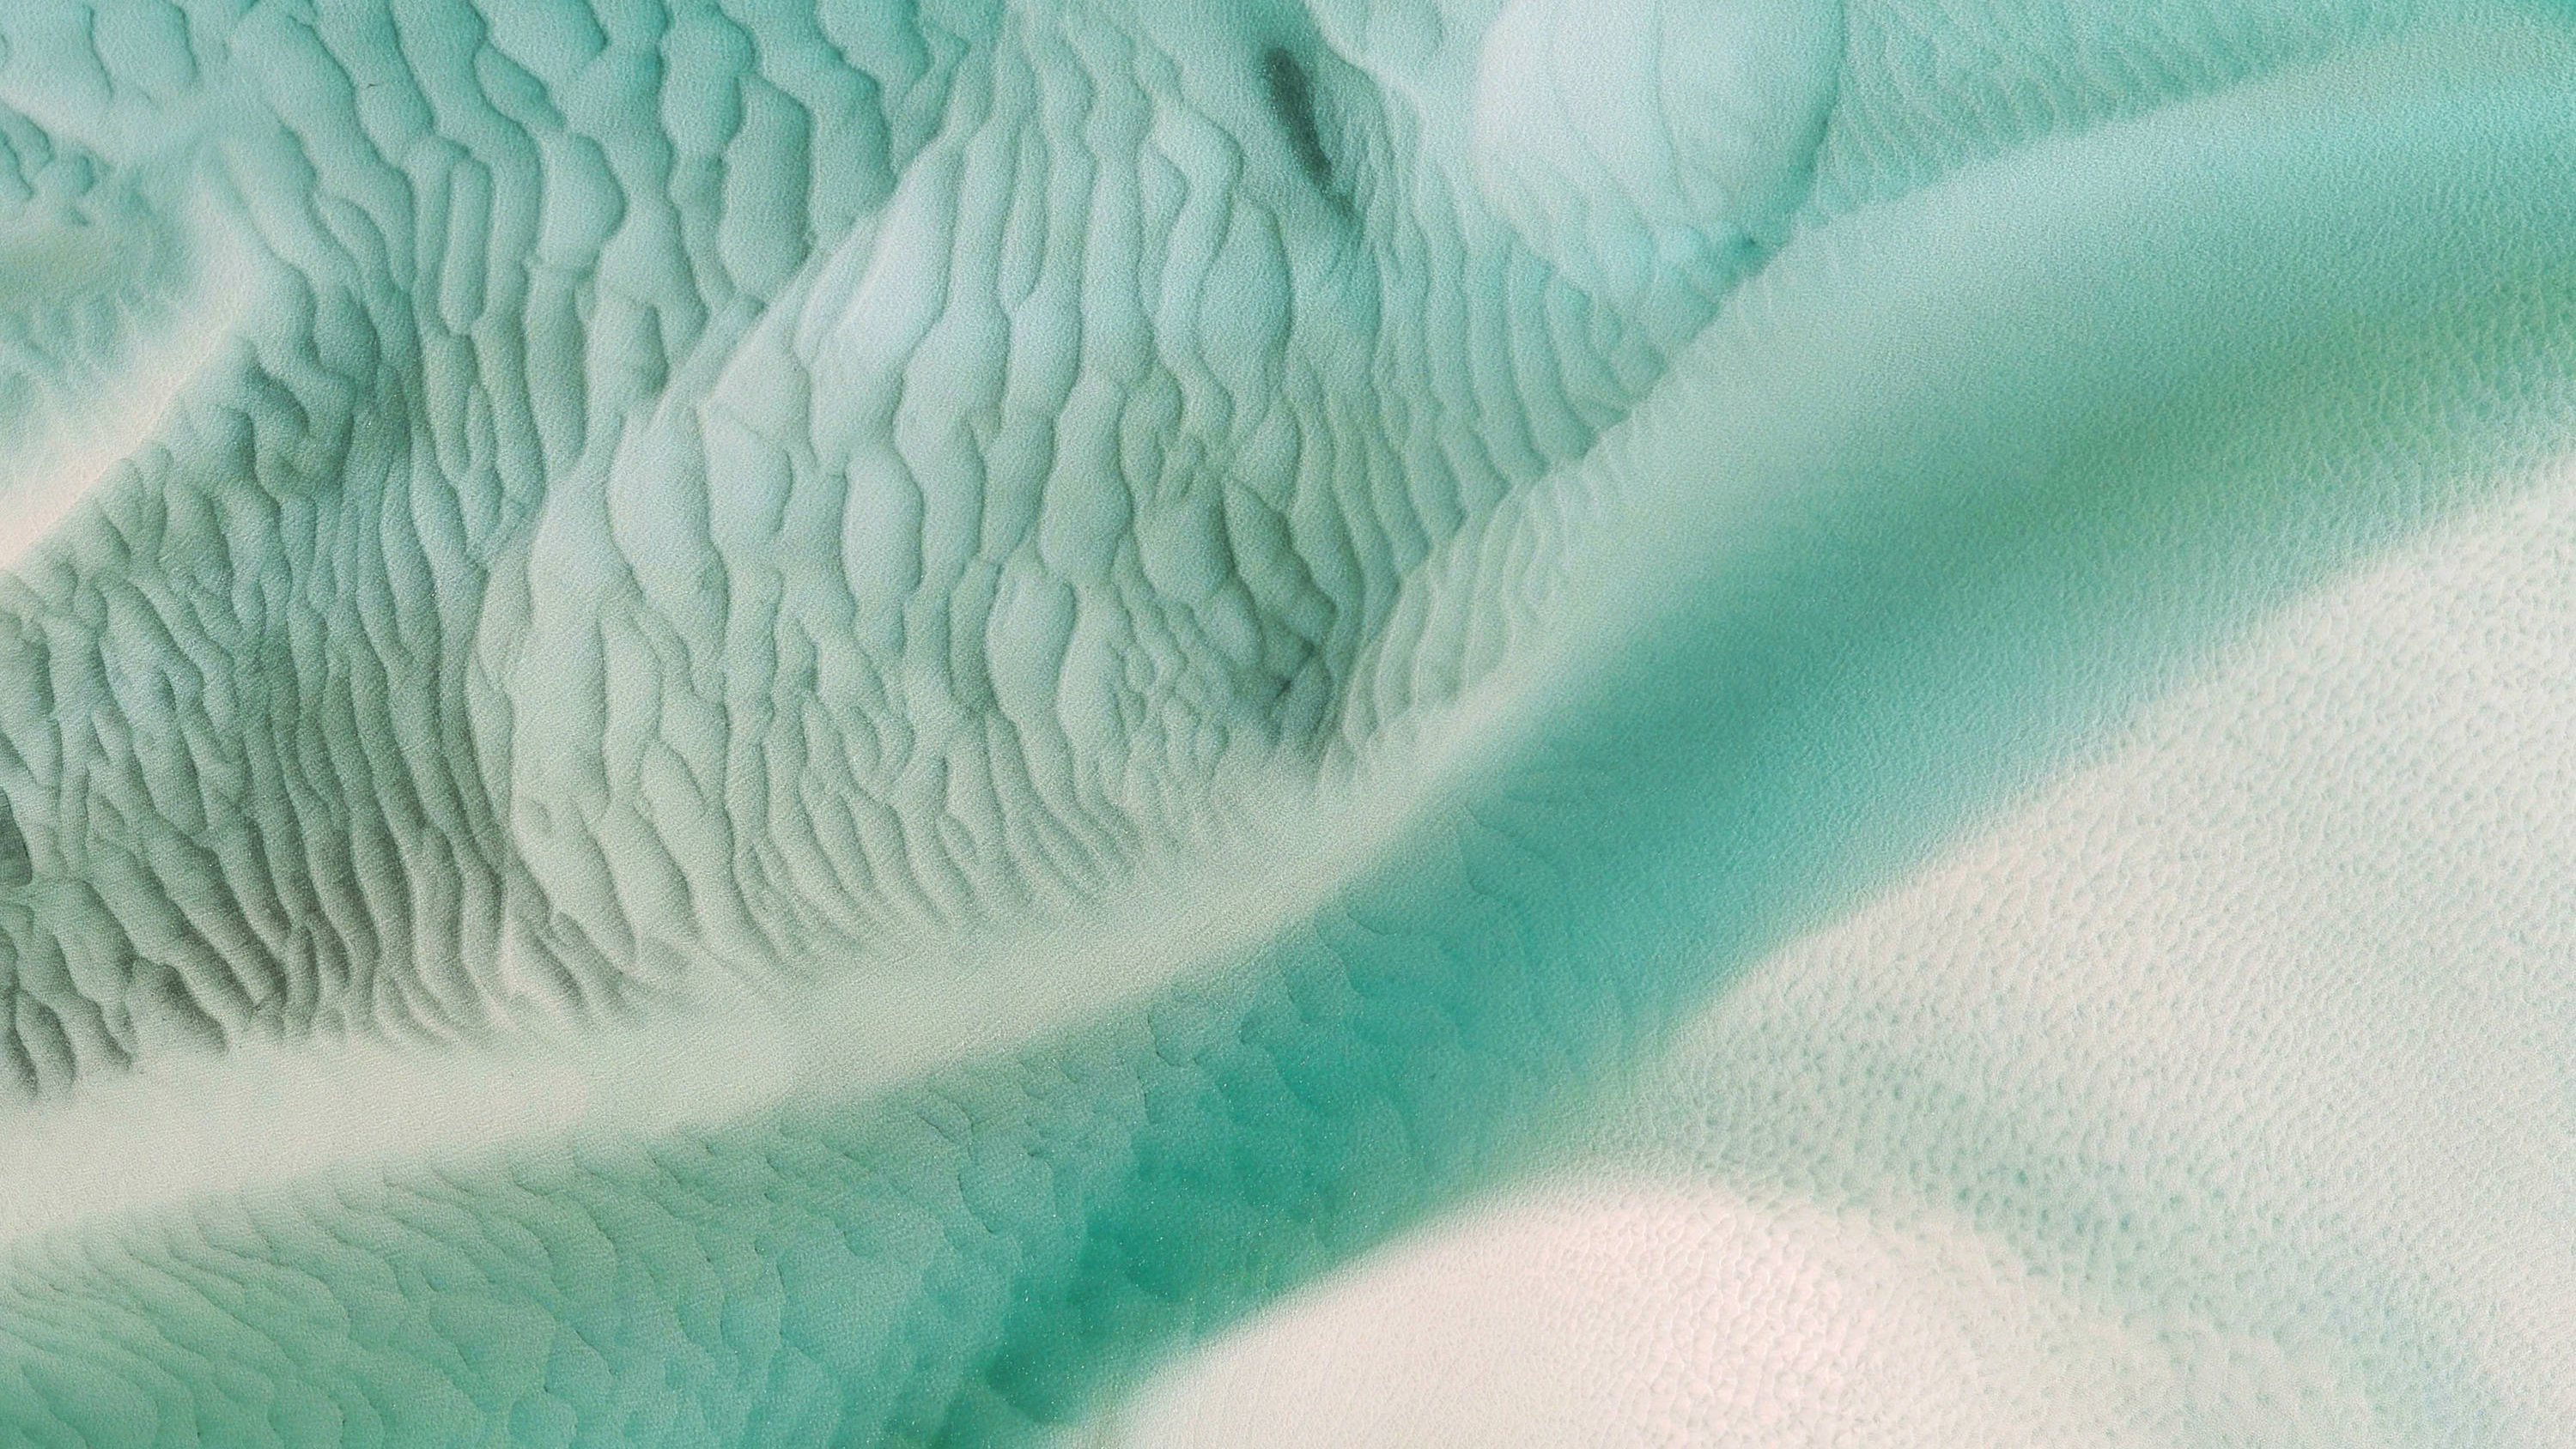 google earth wallpaper,aqua,green,turquoise,textile,wave